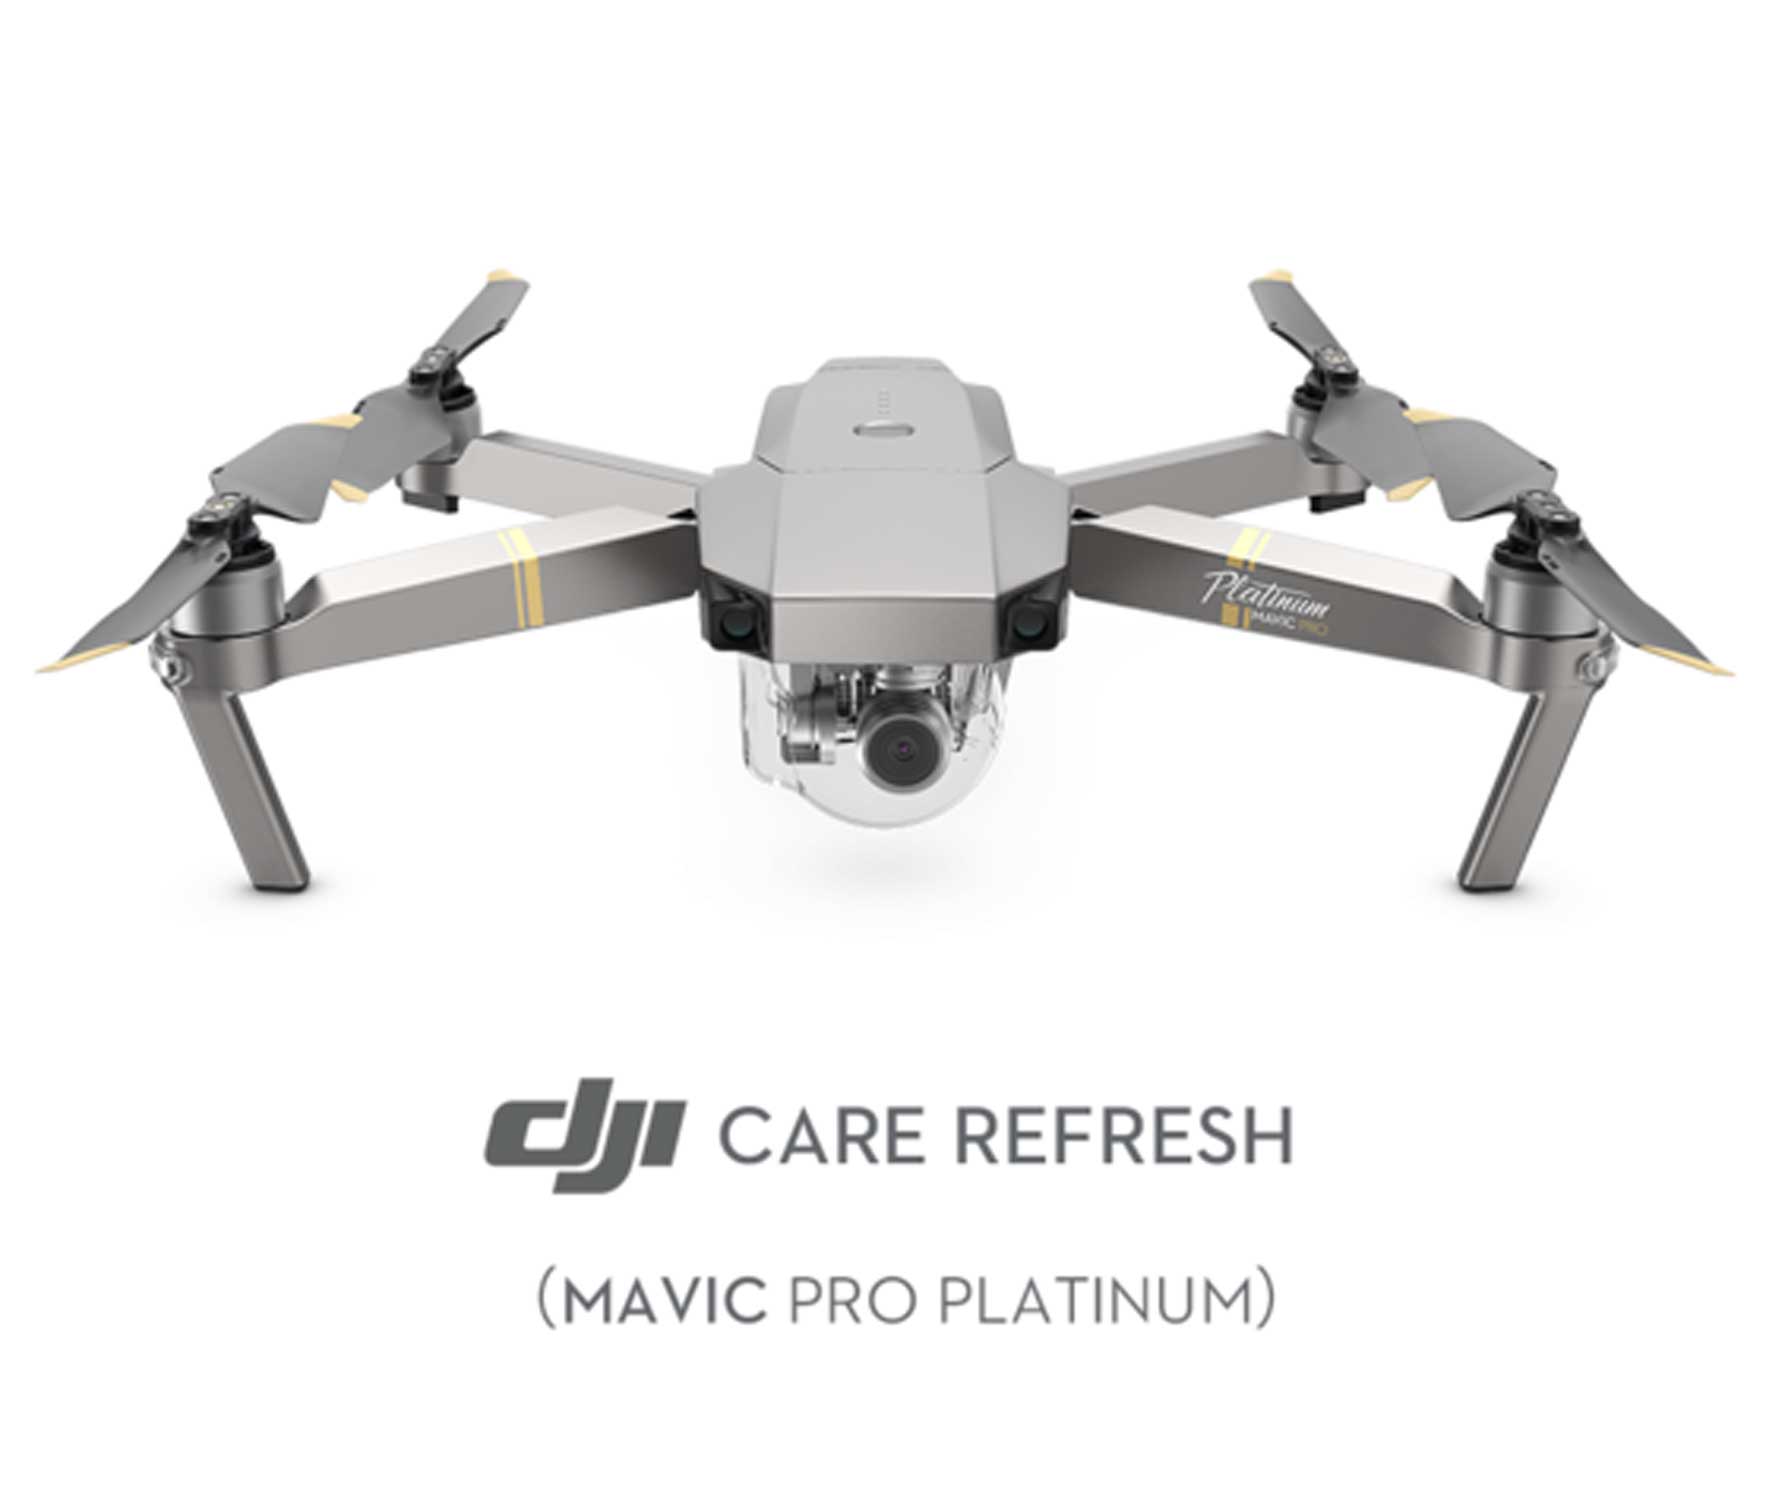 Dji Care Refresh Mavic Pro Platinum Innovative Uas Drones